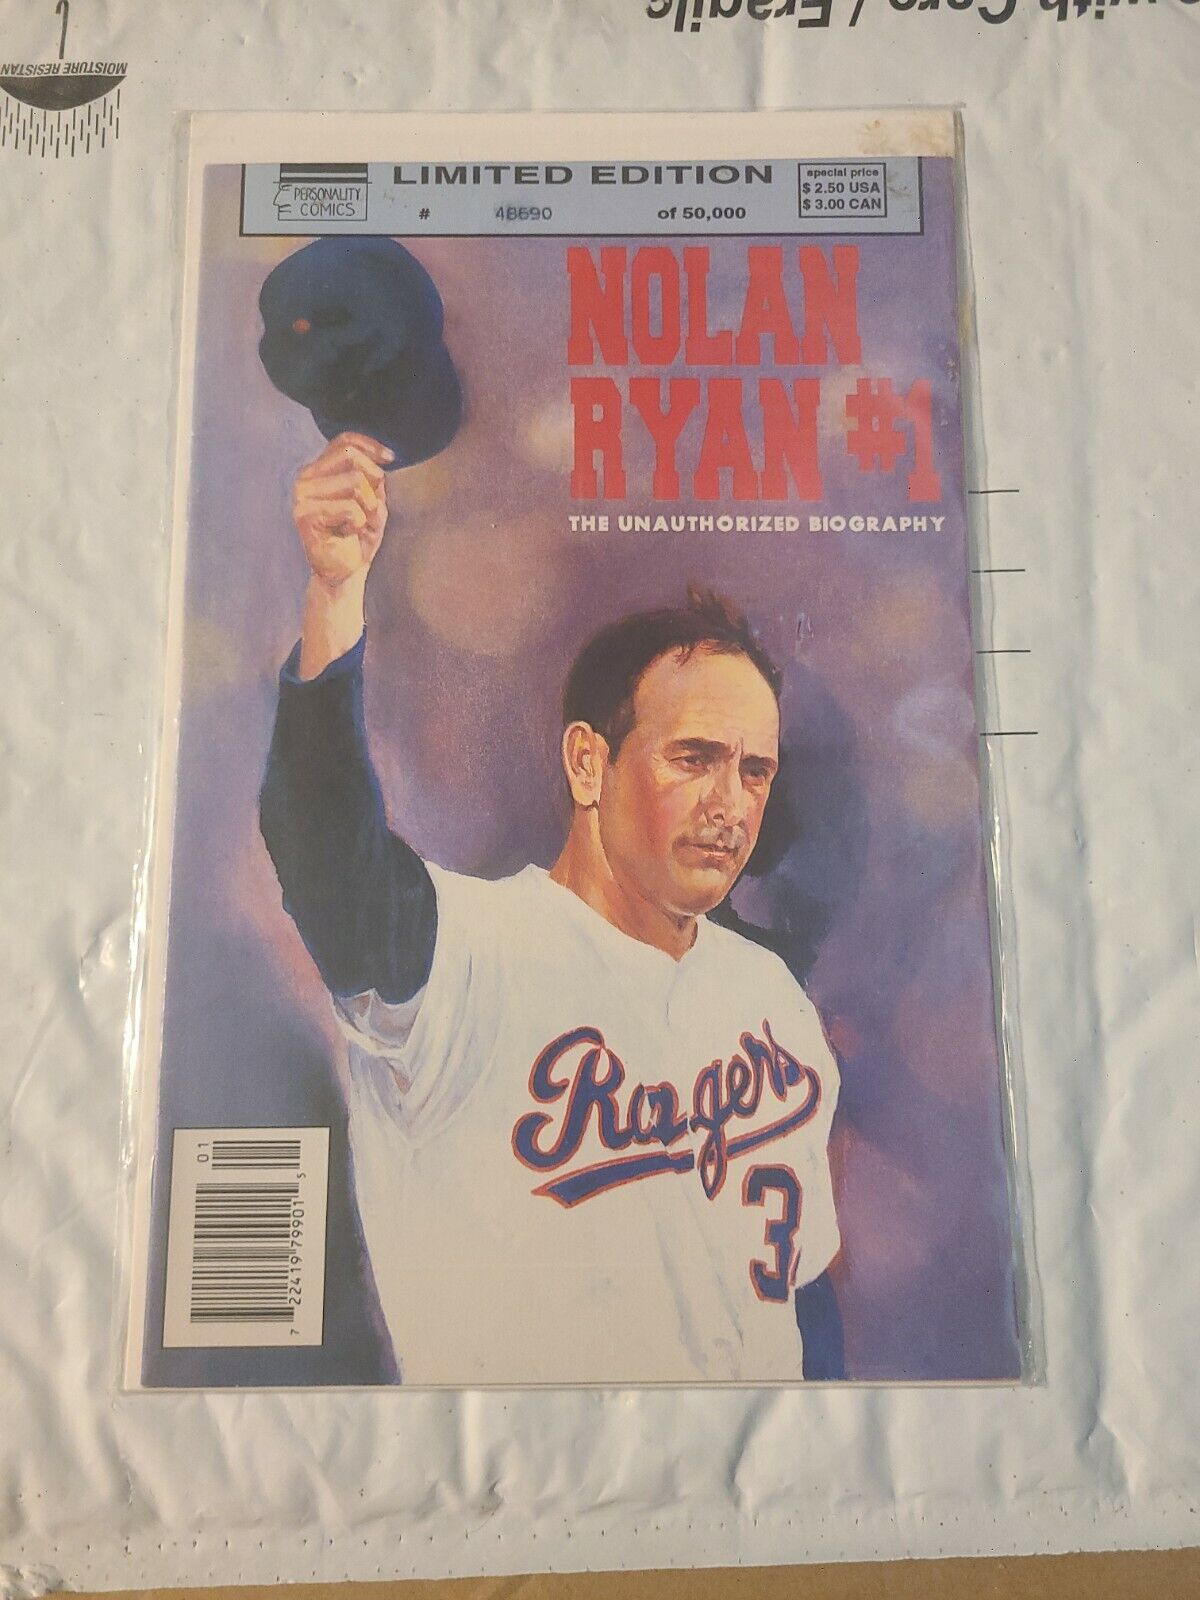 Nolan Ryan #1 - Personality Comics - Limited Edition (July 1992) 48690 Of 50,000